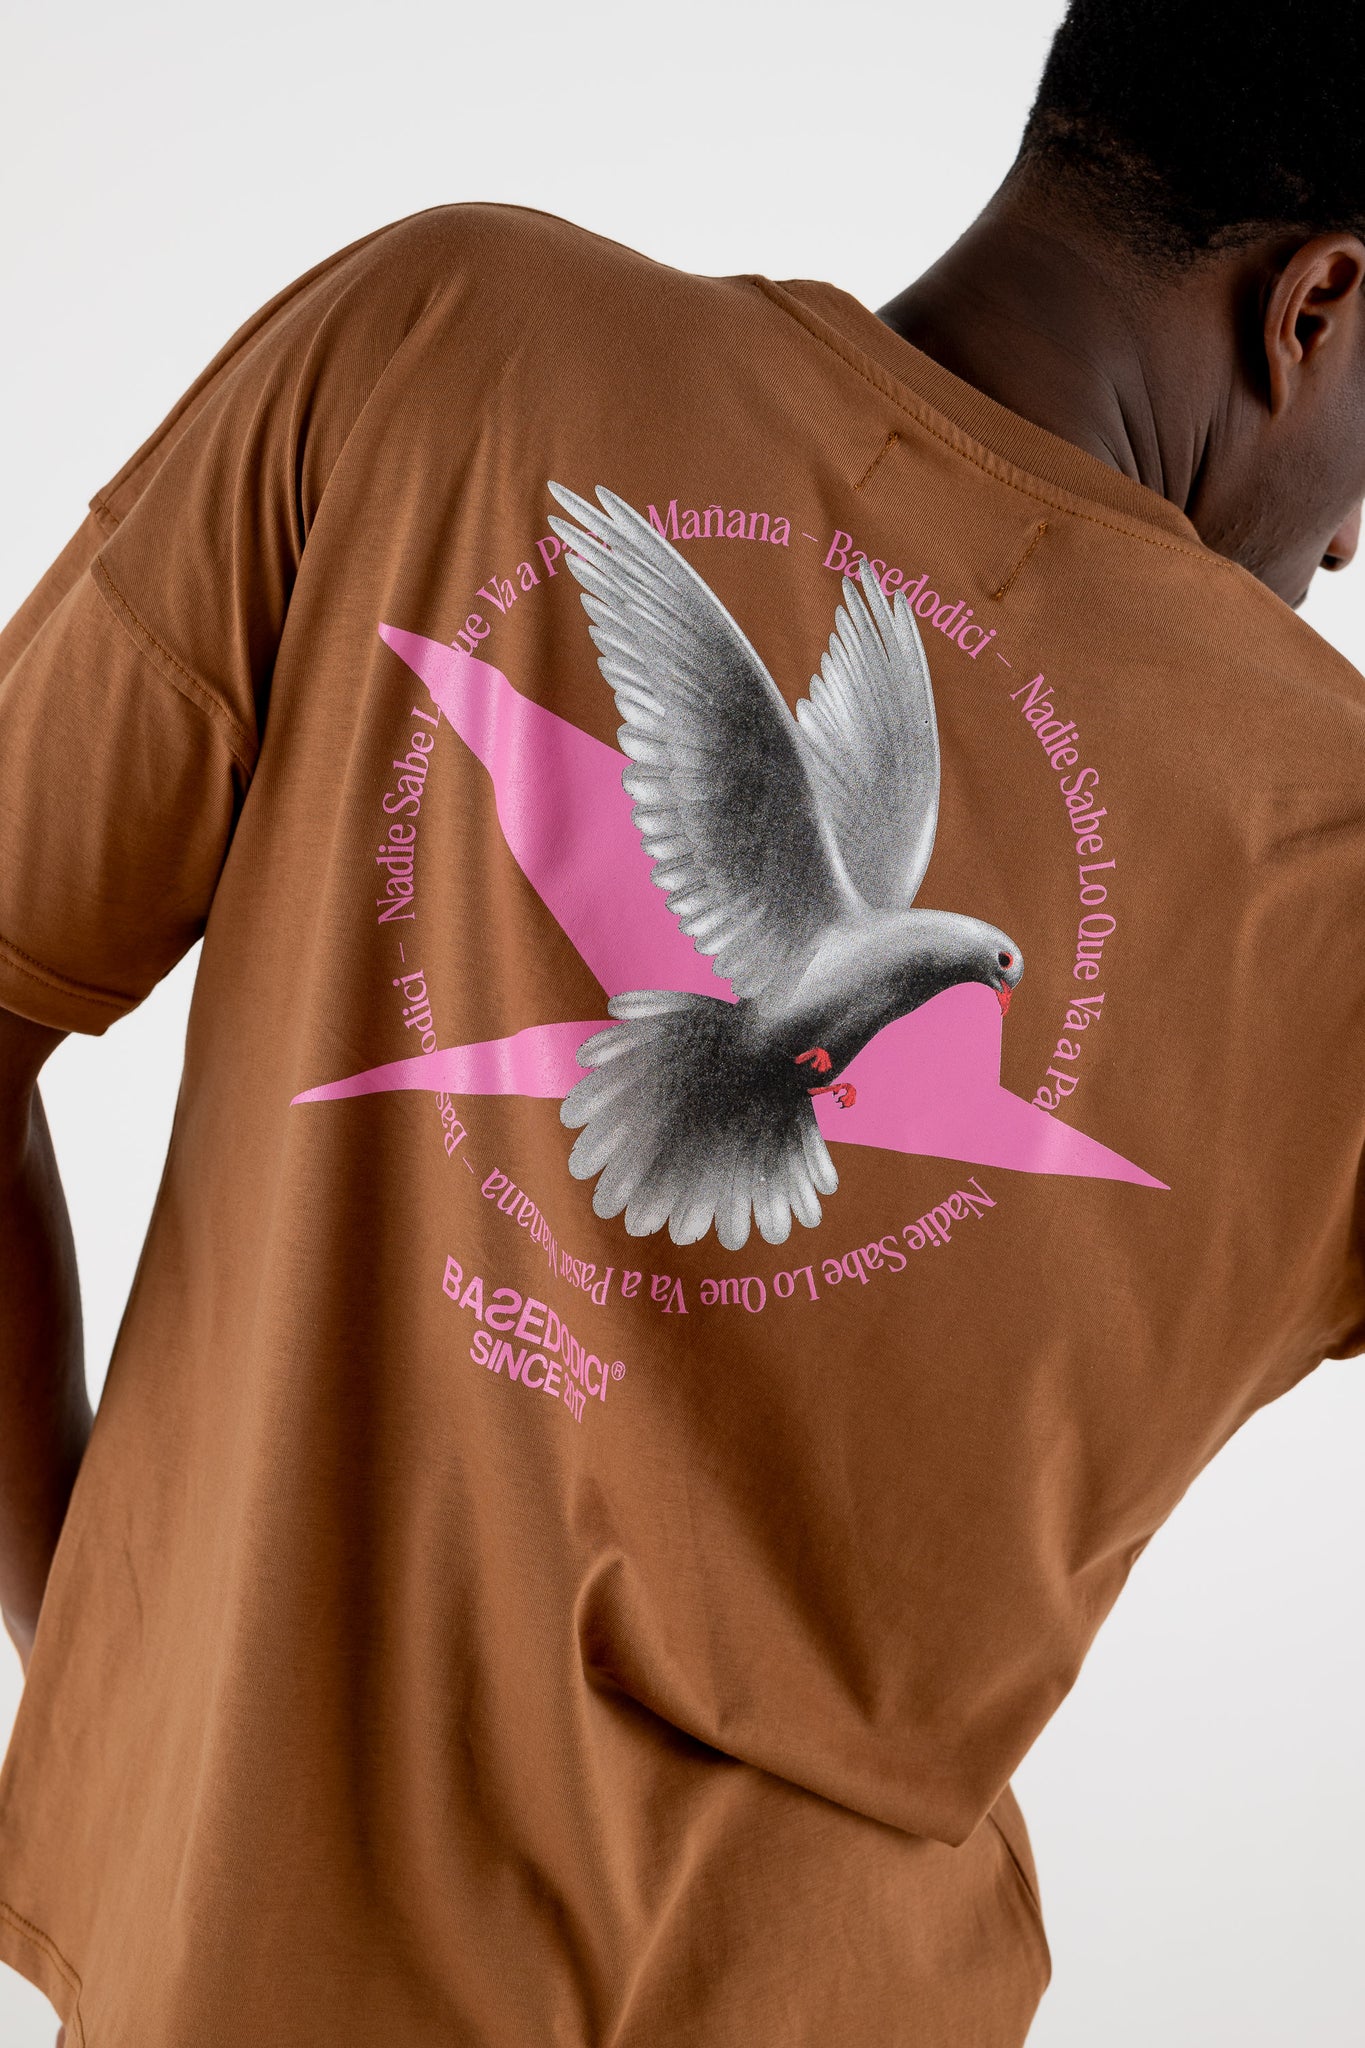 T-Shirt Over “RESORT” Dove Brown